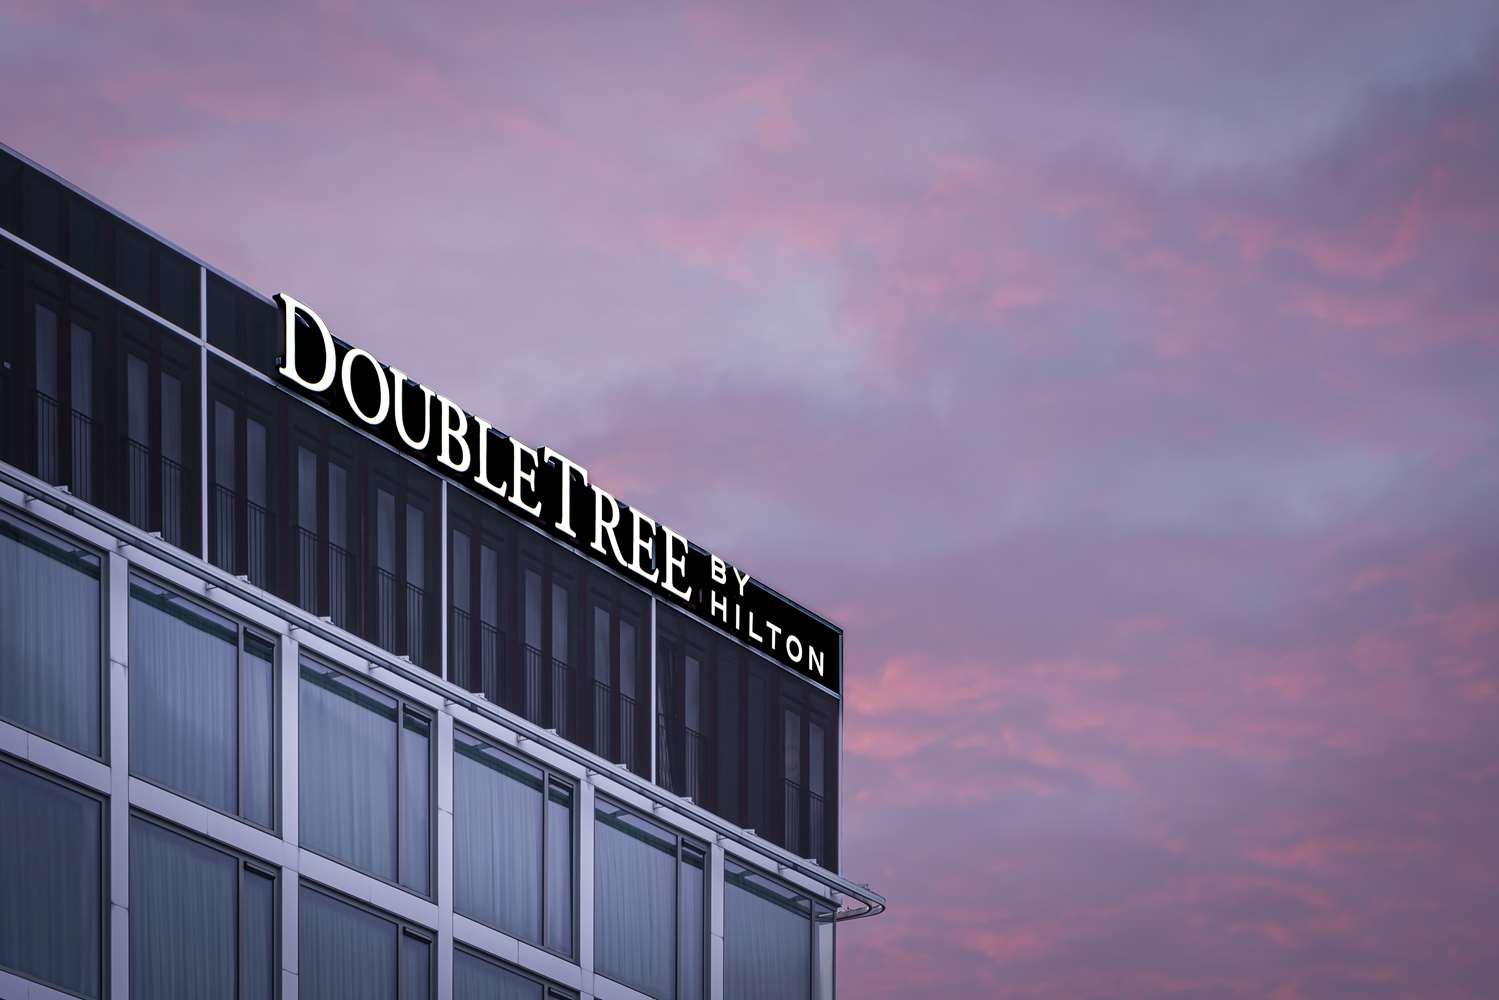 DoubleTree by Hilton Amsterdam - NDSM Wharf in Amsterdam, NL